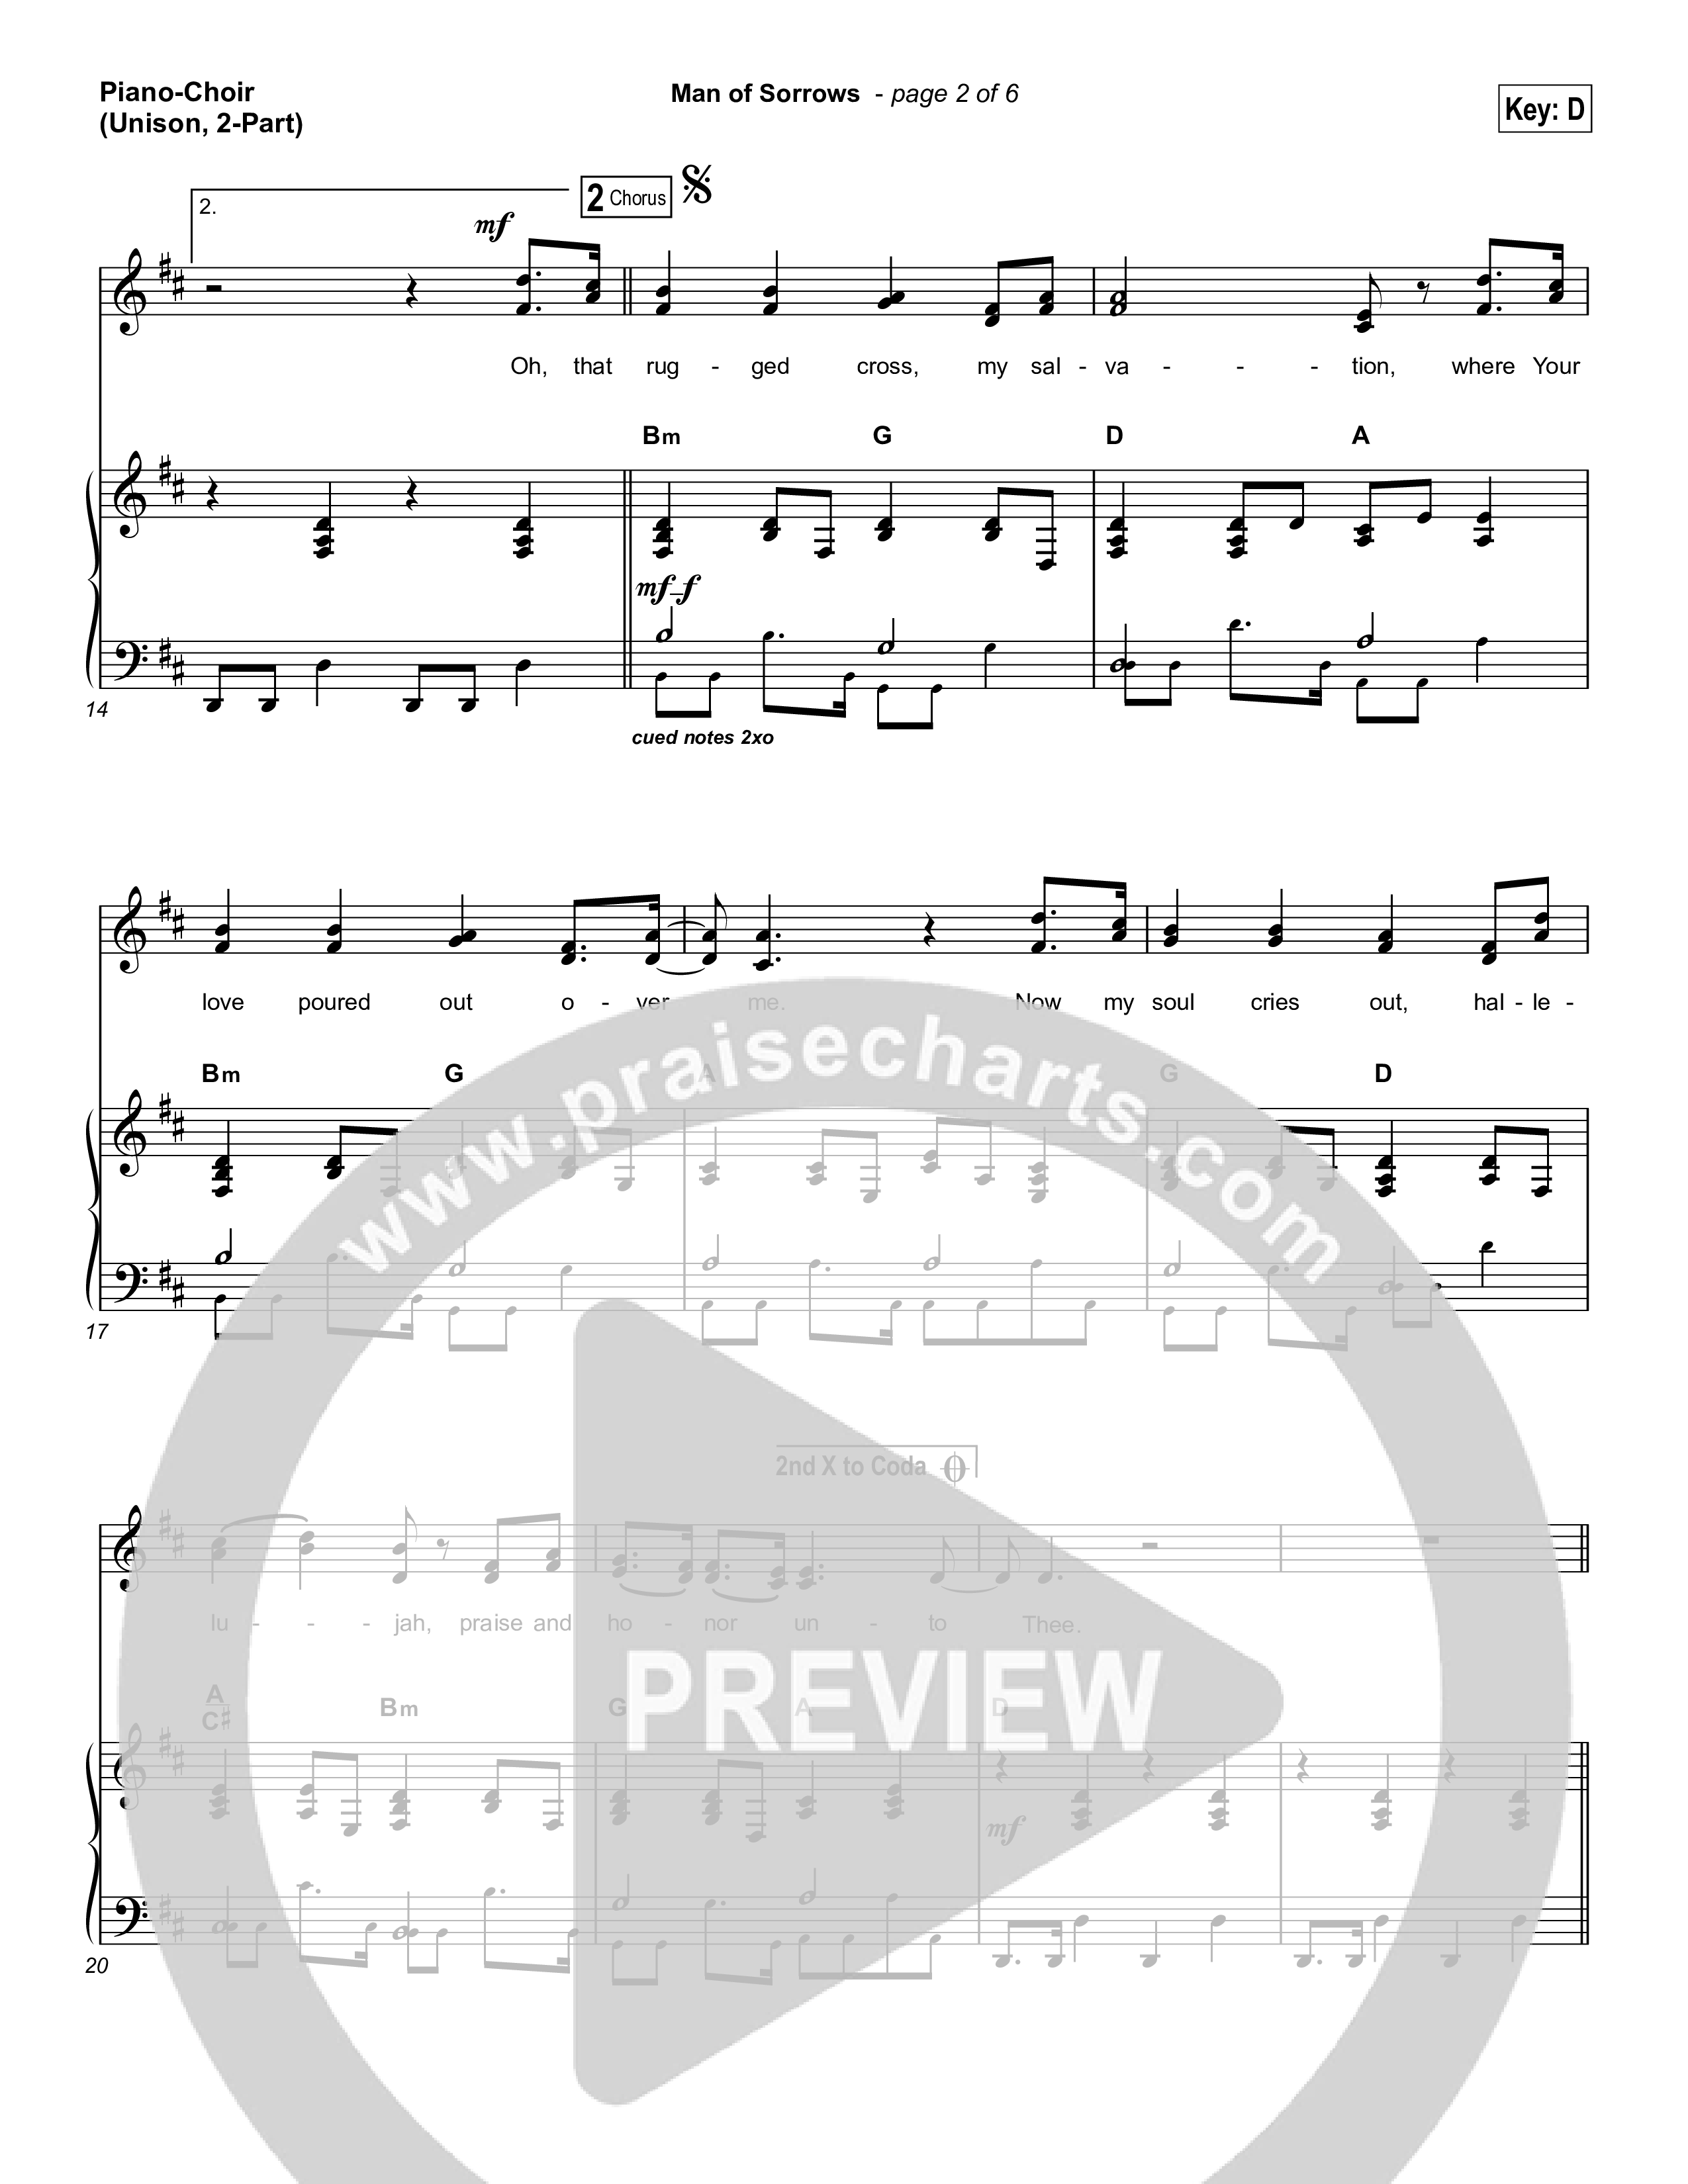 Man Of Sorrows (Unison/2-Part) Piano/Choir  (Uni/2-Part) (Hillsong Worship / Arr. Erik Foster)